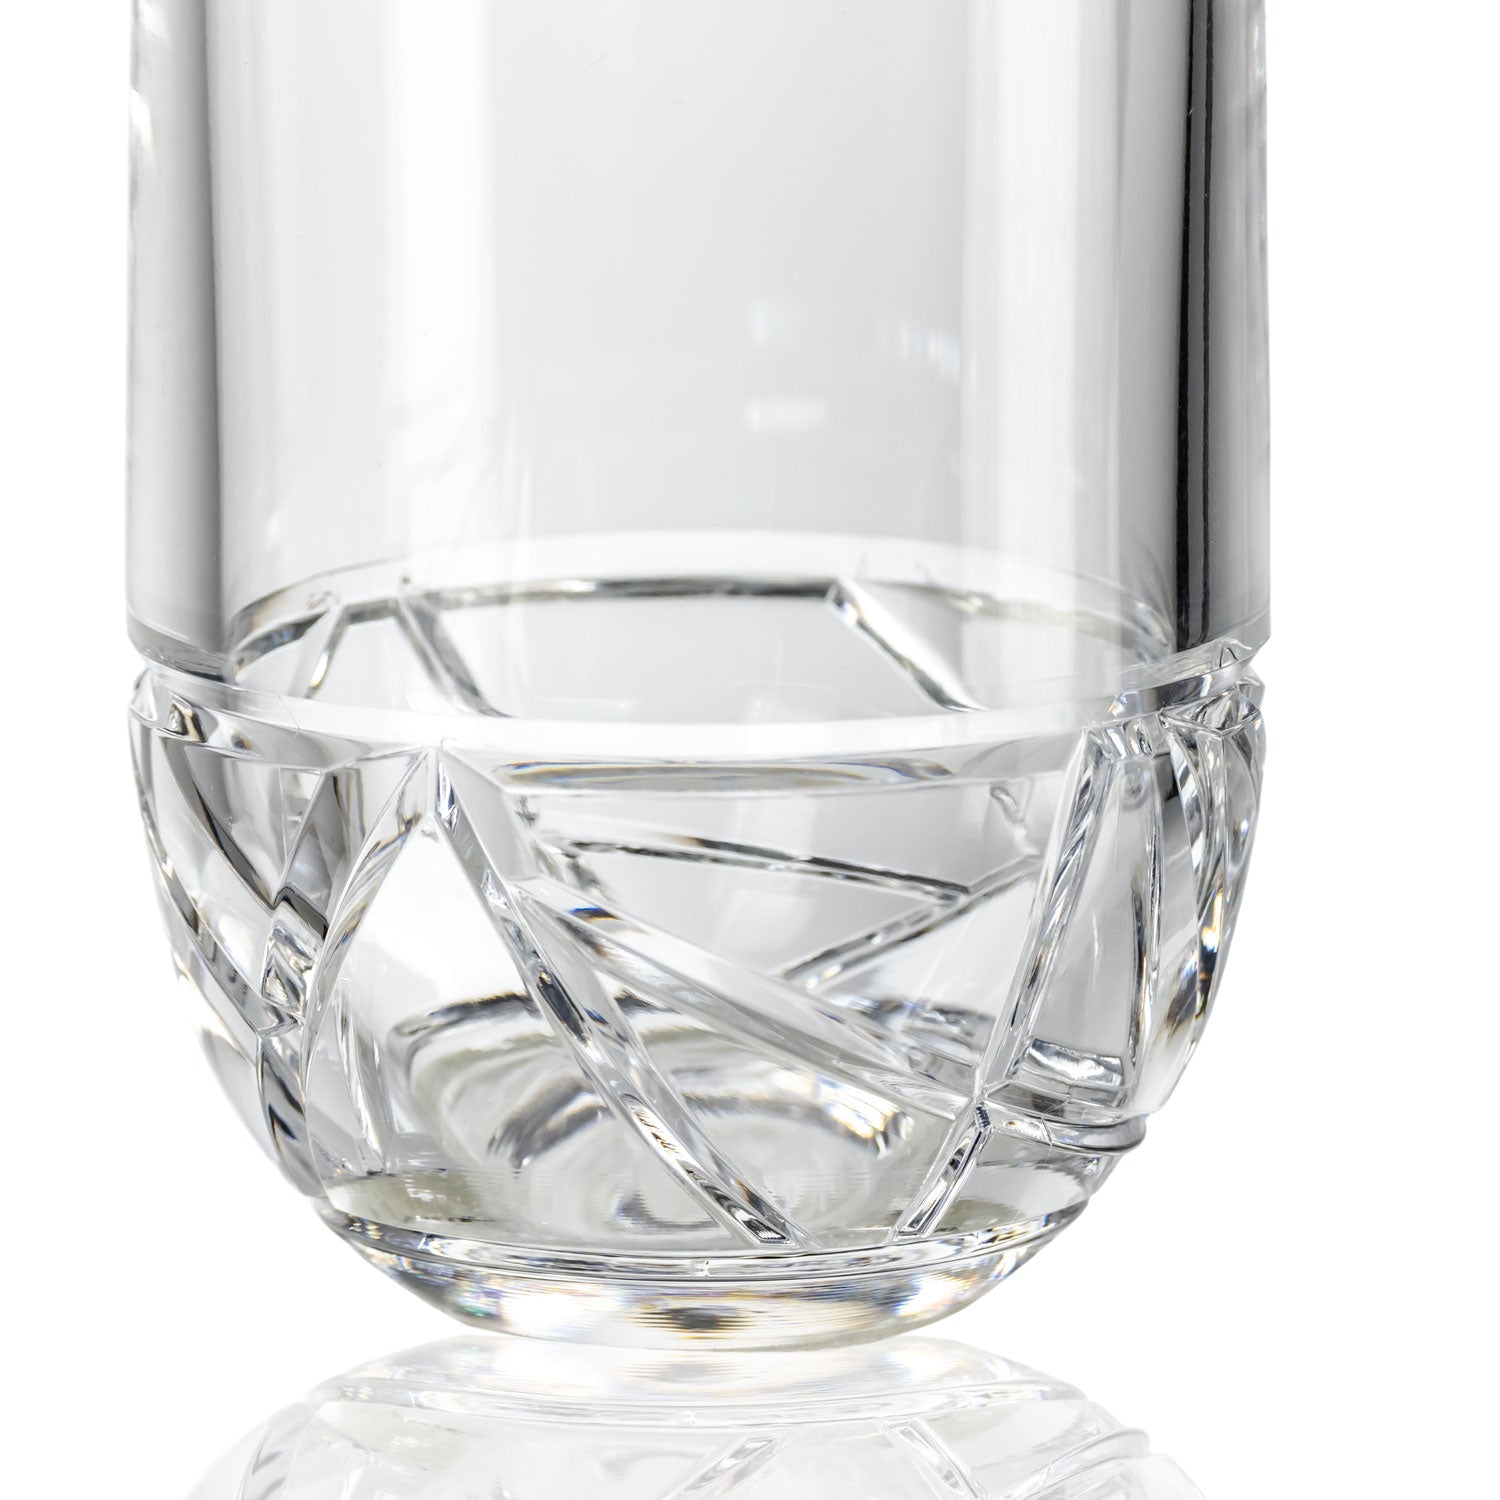 Merritt Designs 18oz Mosaic Clear Acrylic Tumbler Water Glass